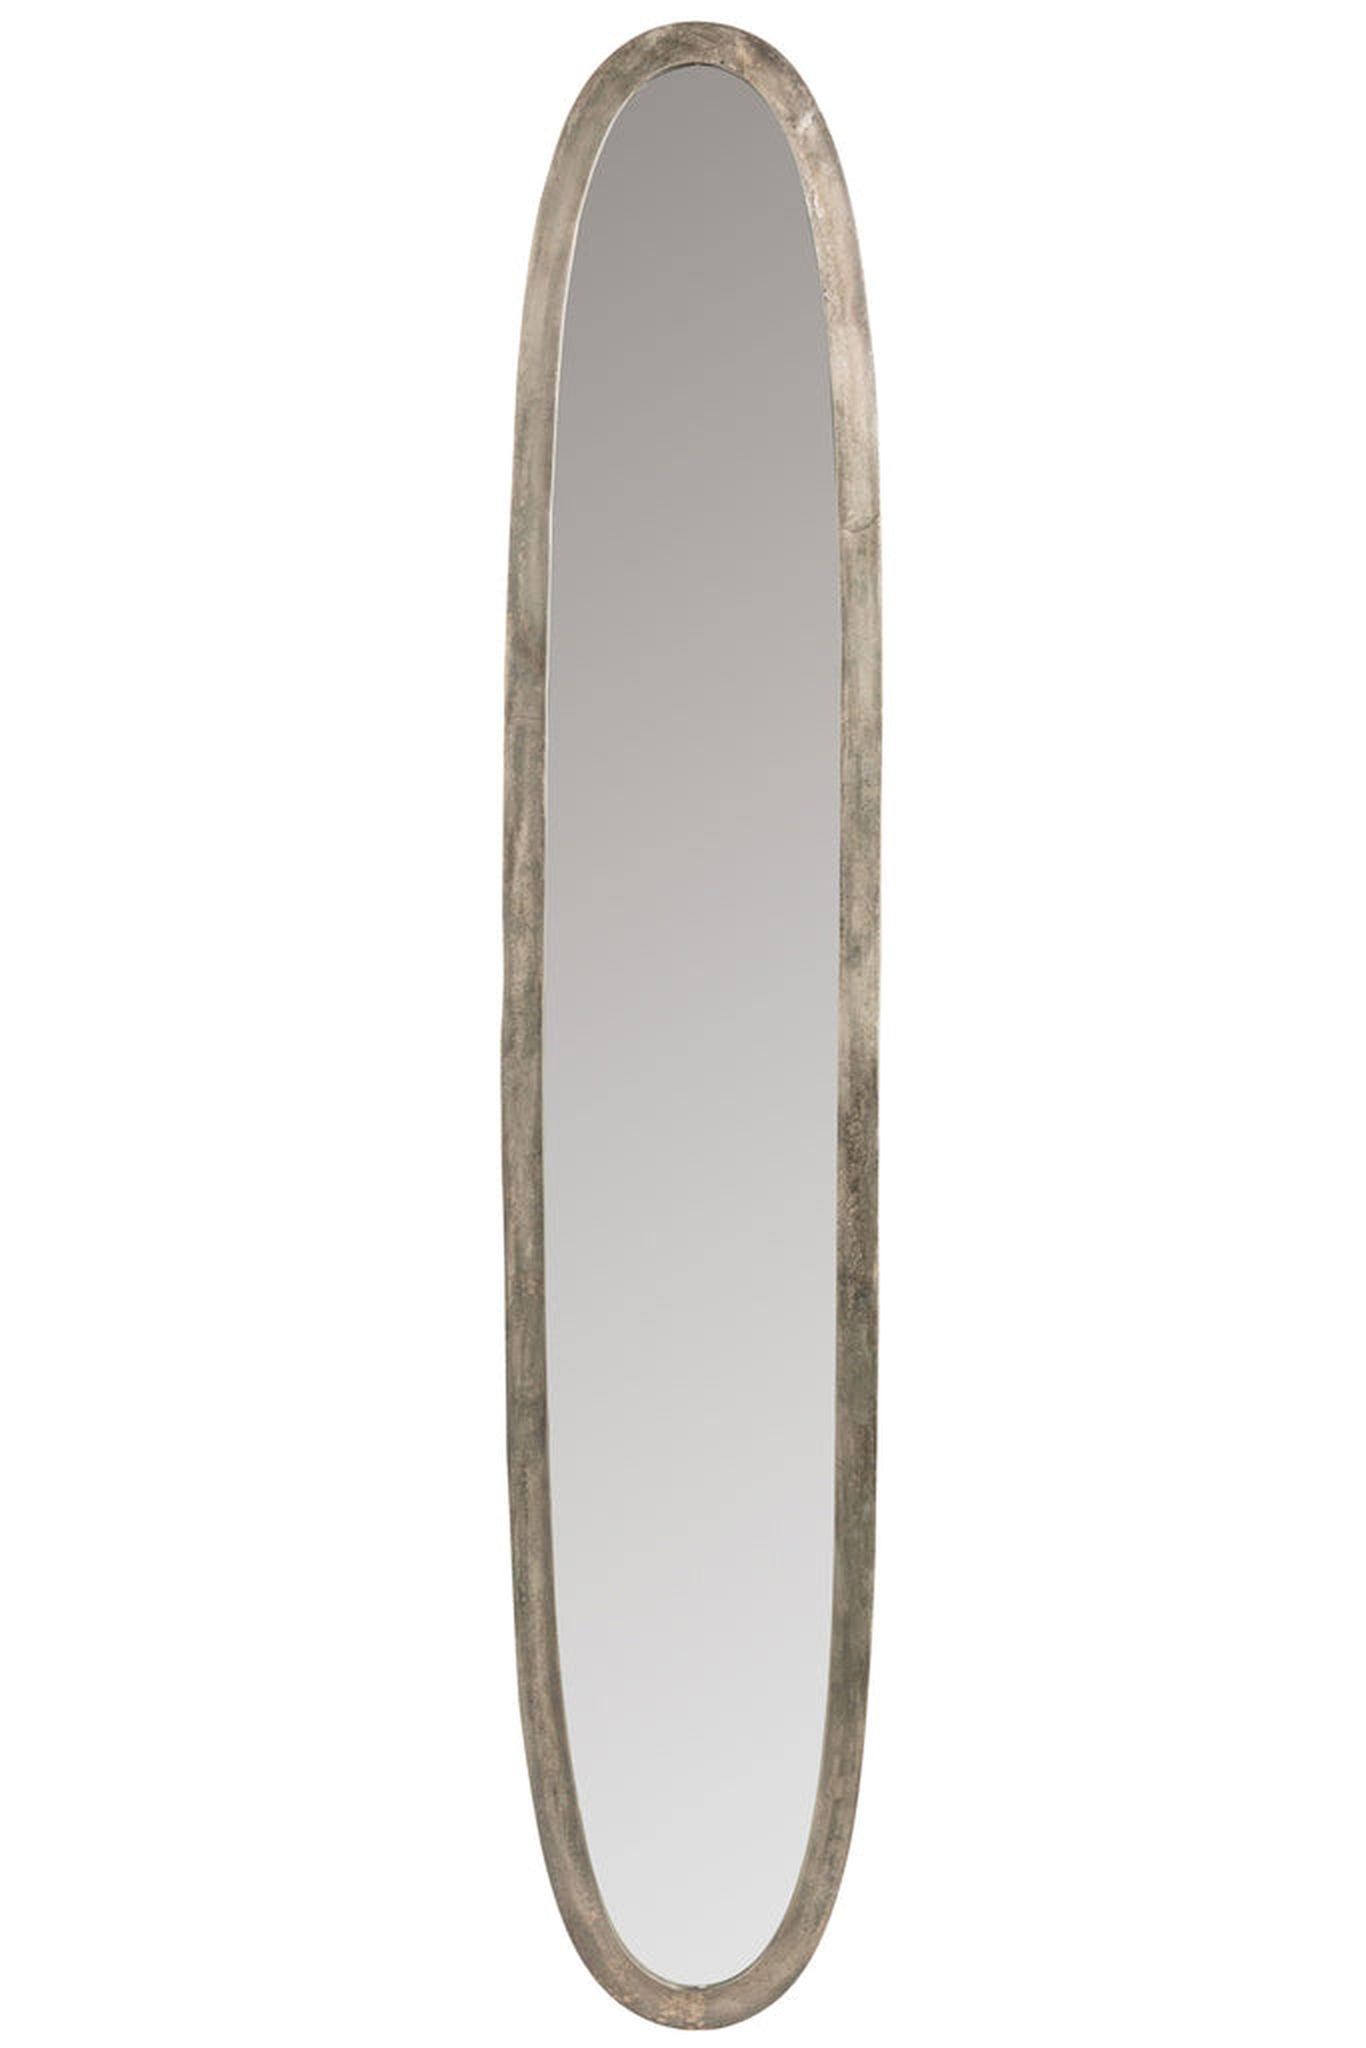 Mirror Oval Aluminium/Glass Antique Grey Large - vivahabitat.com